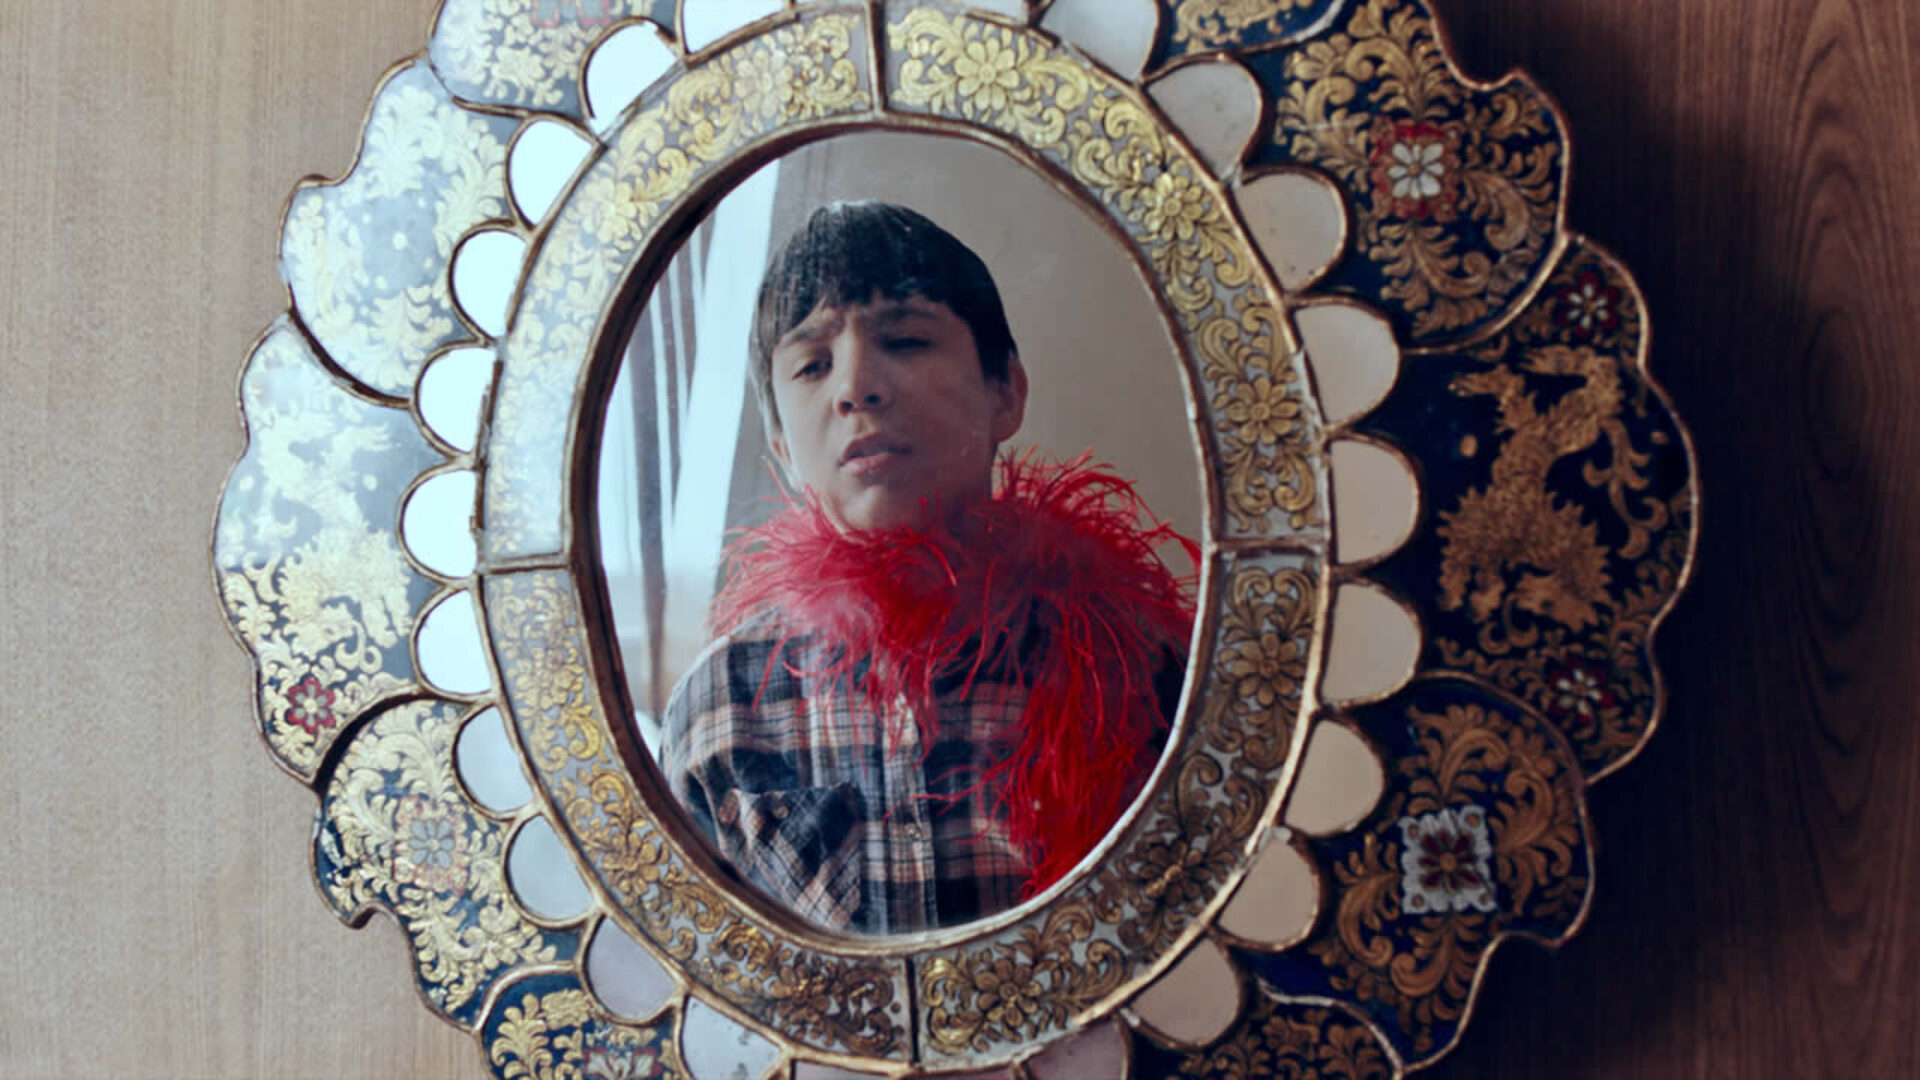 SANDSTERN - Oktay's mirror image